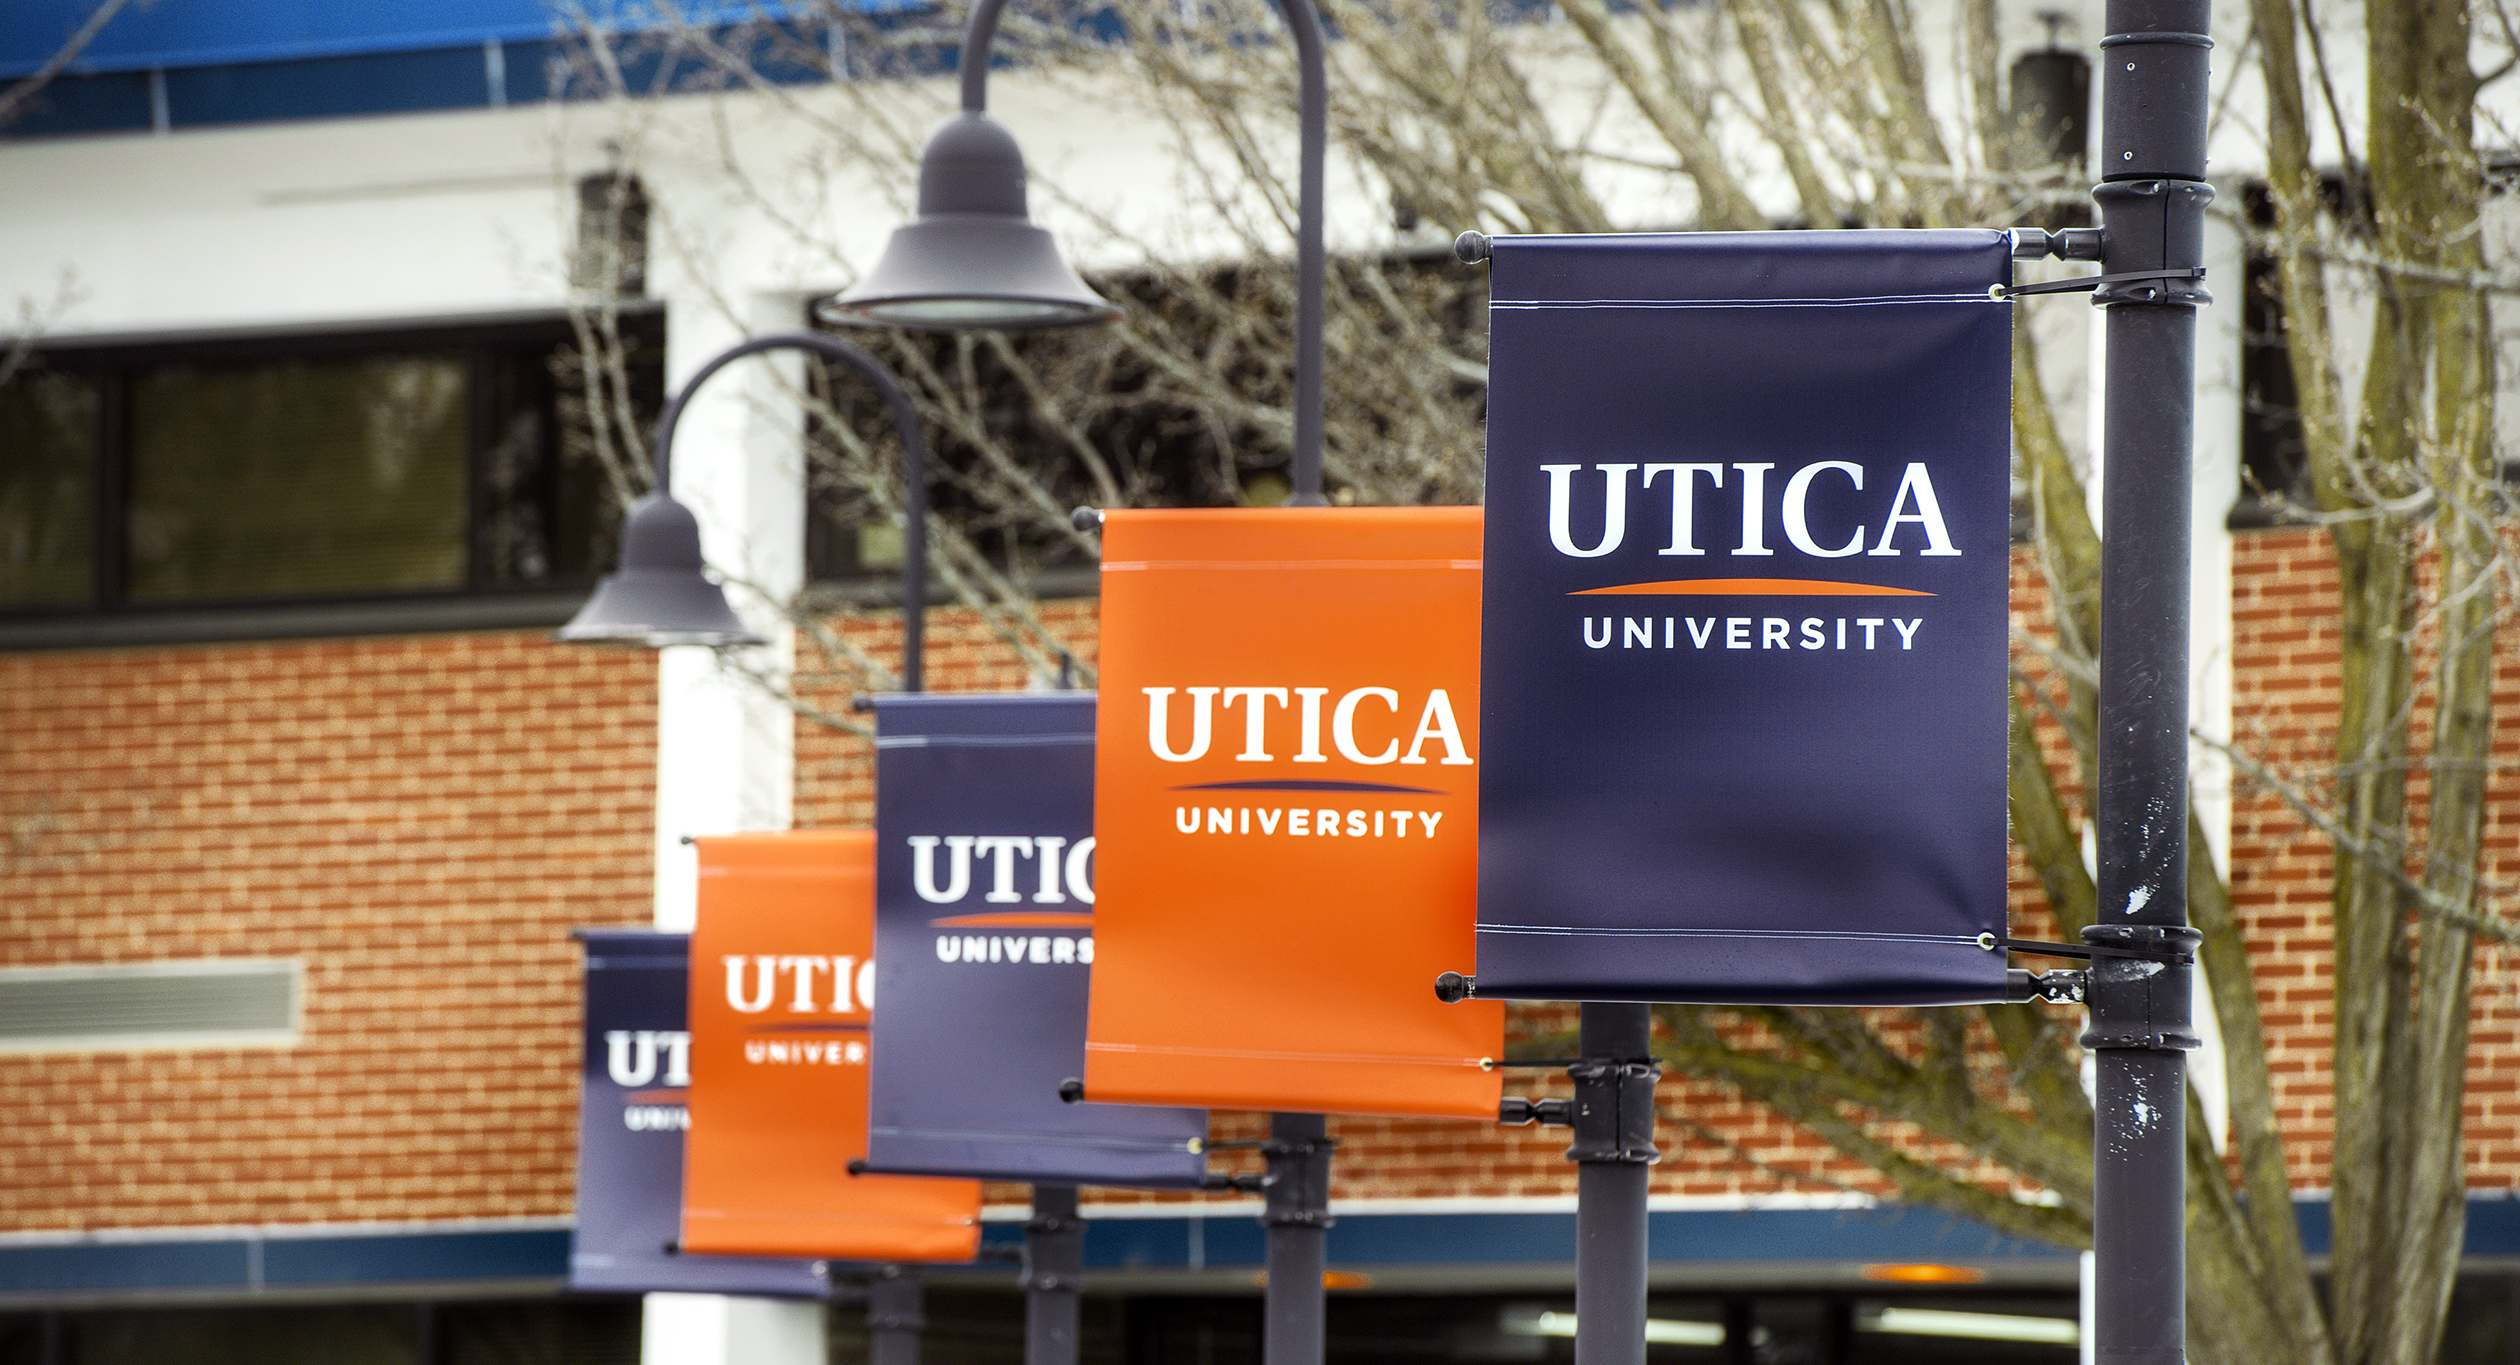 Utica University Web Content Tools